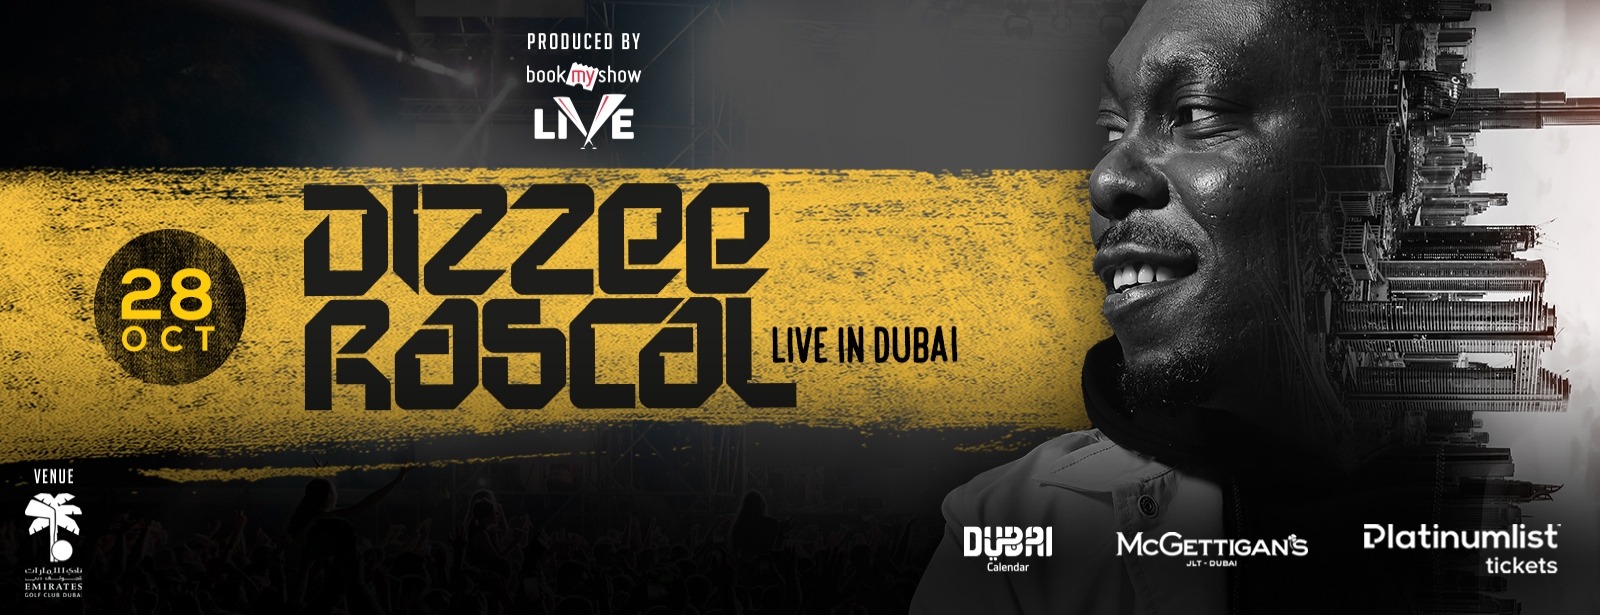 Dizzee Rascal Live Concert in Dubai - Coming Soon in UAE